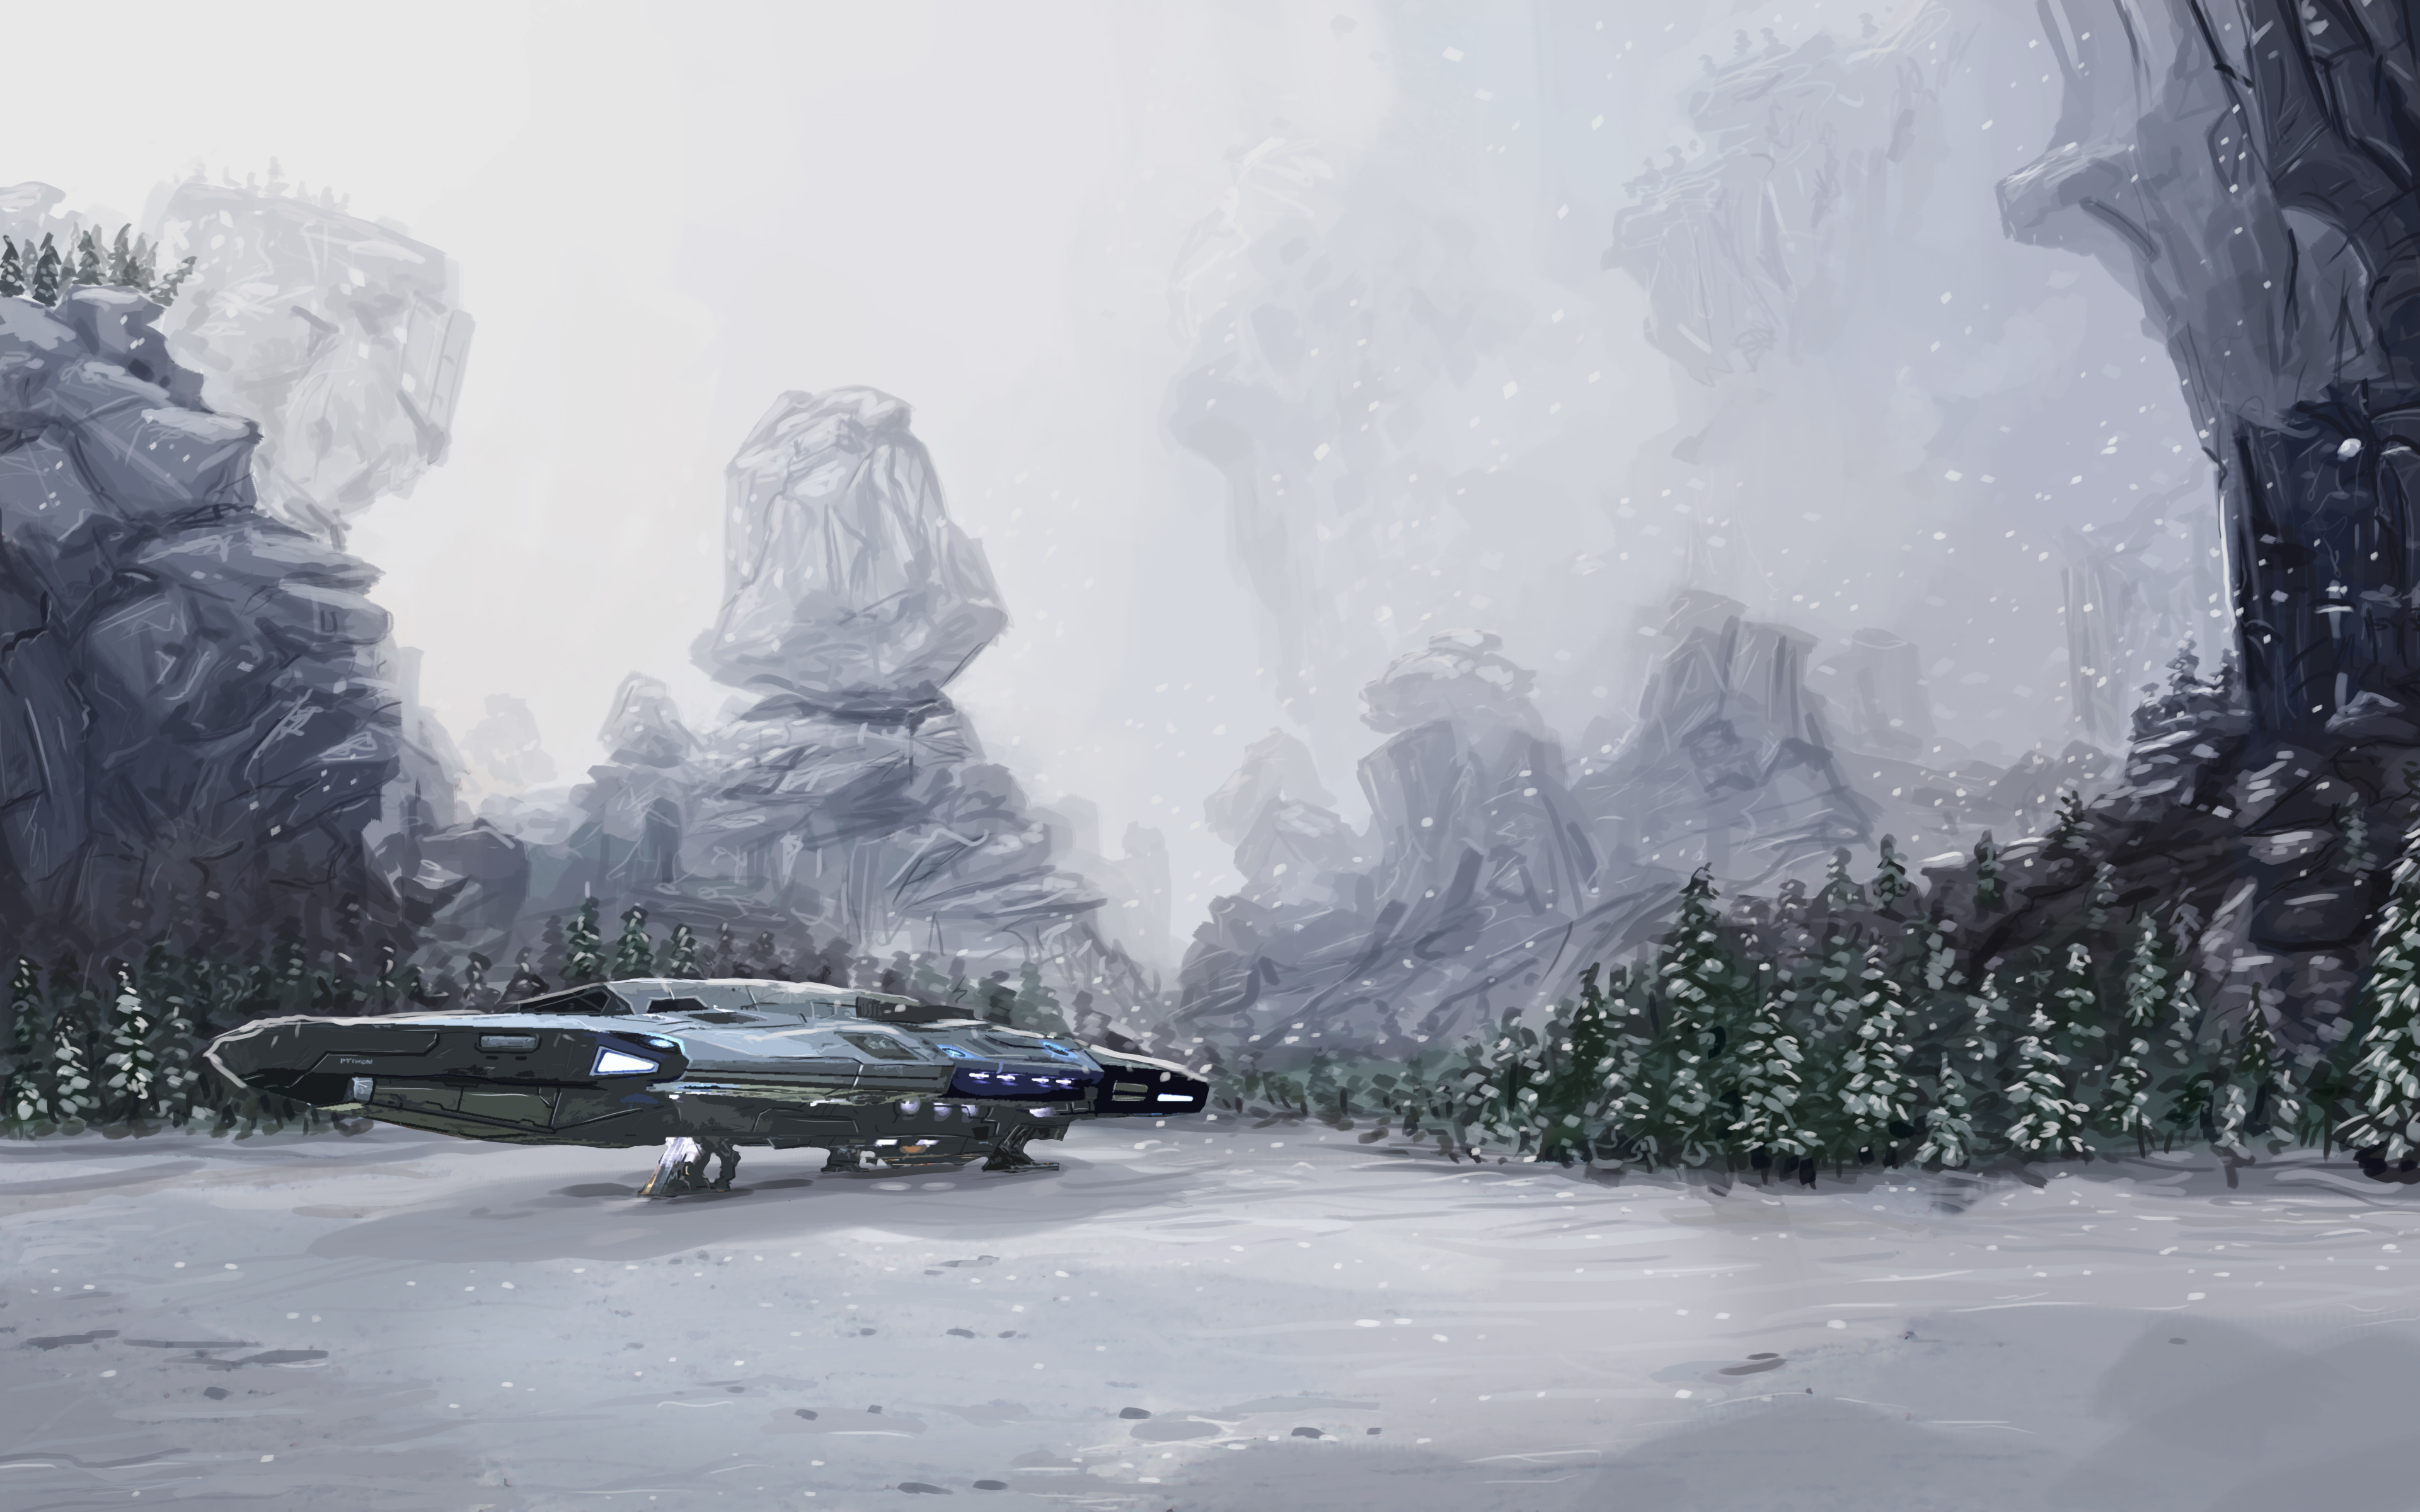 Elite Dangerous Spaceship Science Fiction Snow Winter Kev Art 3840x2400